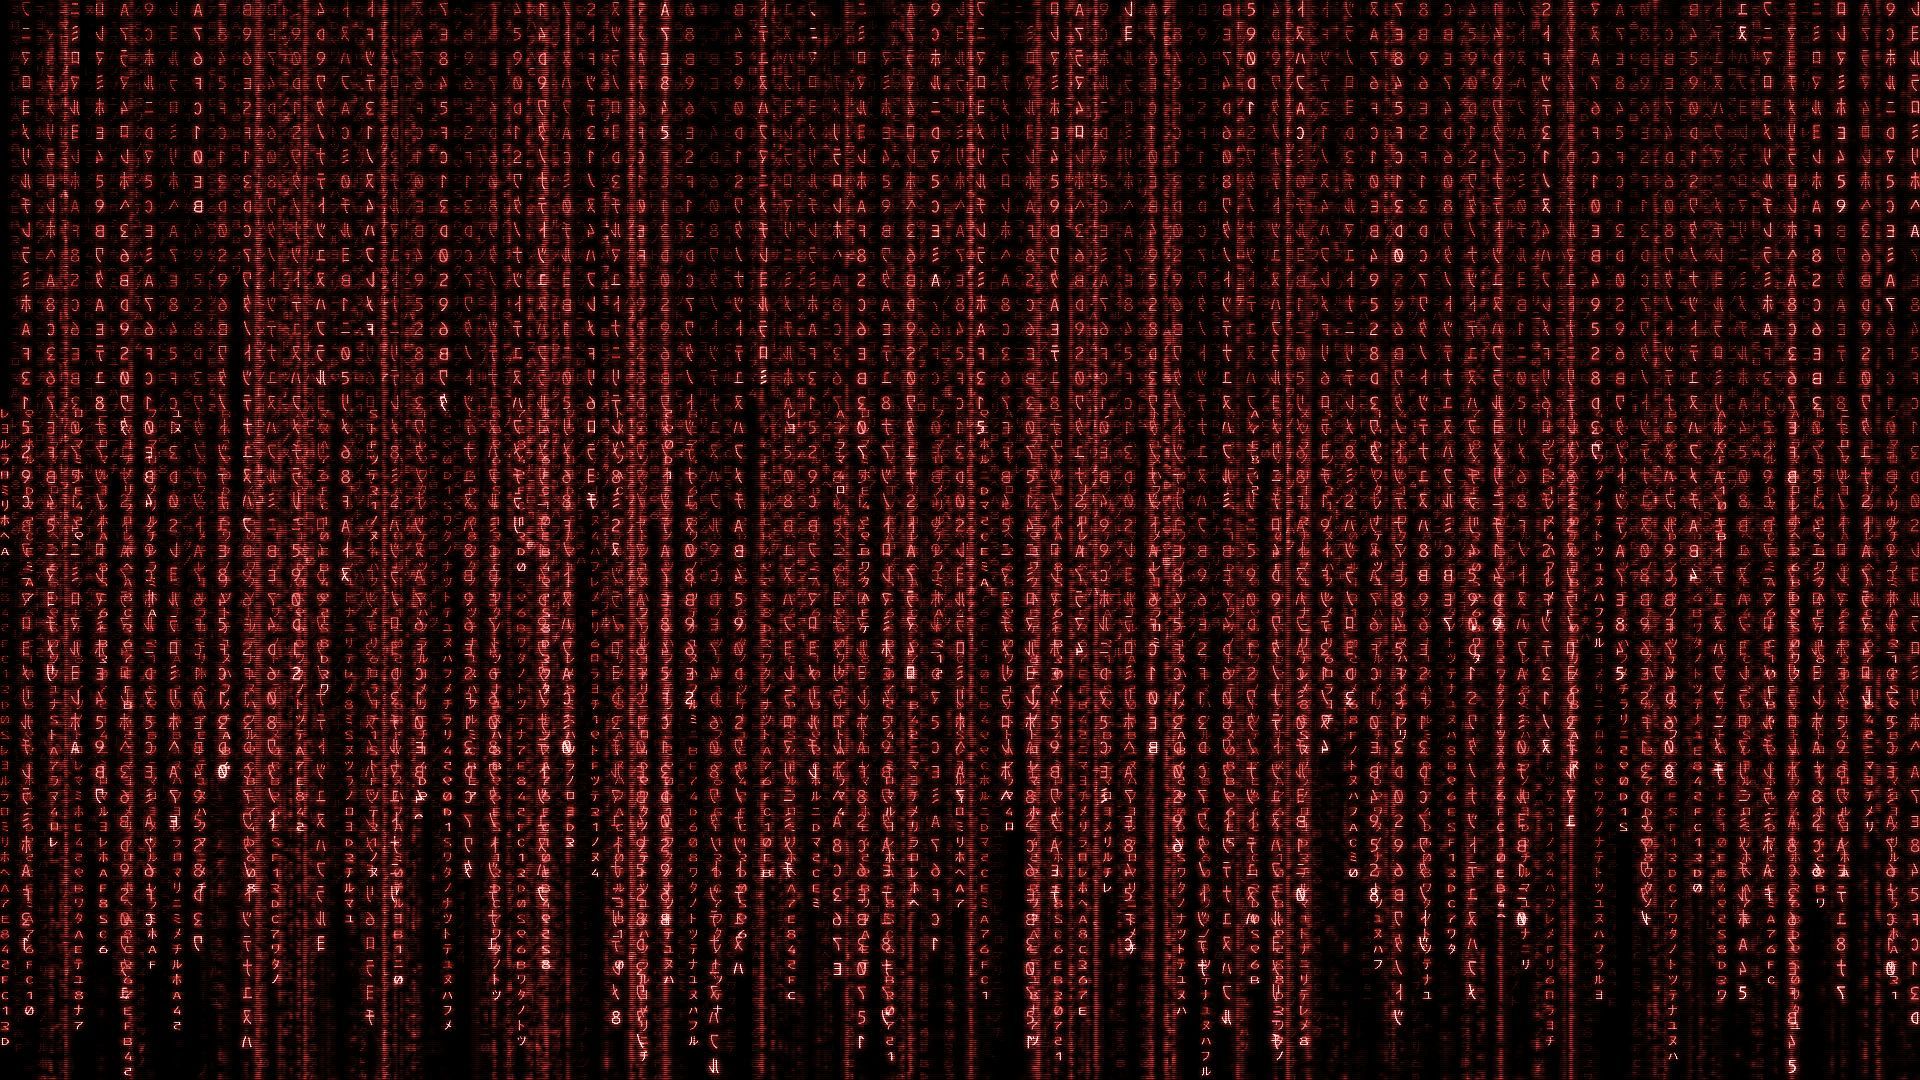 hd wallpaper wallpapers blue matrix binary code hd widescreen